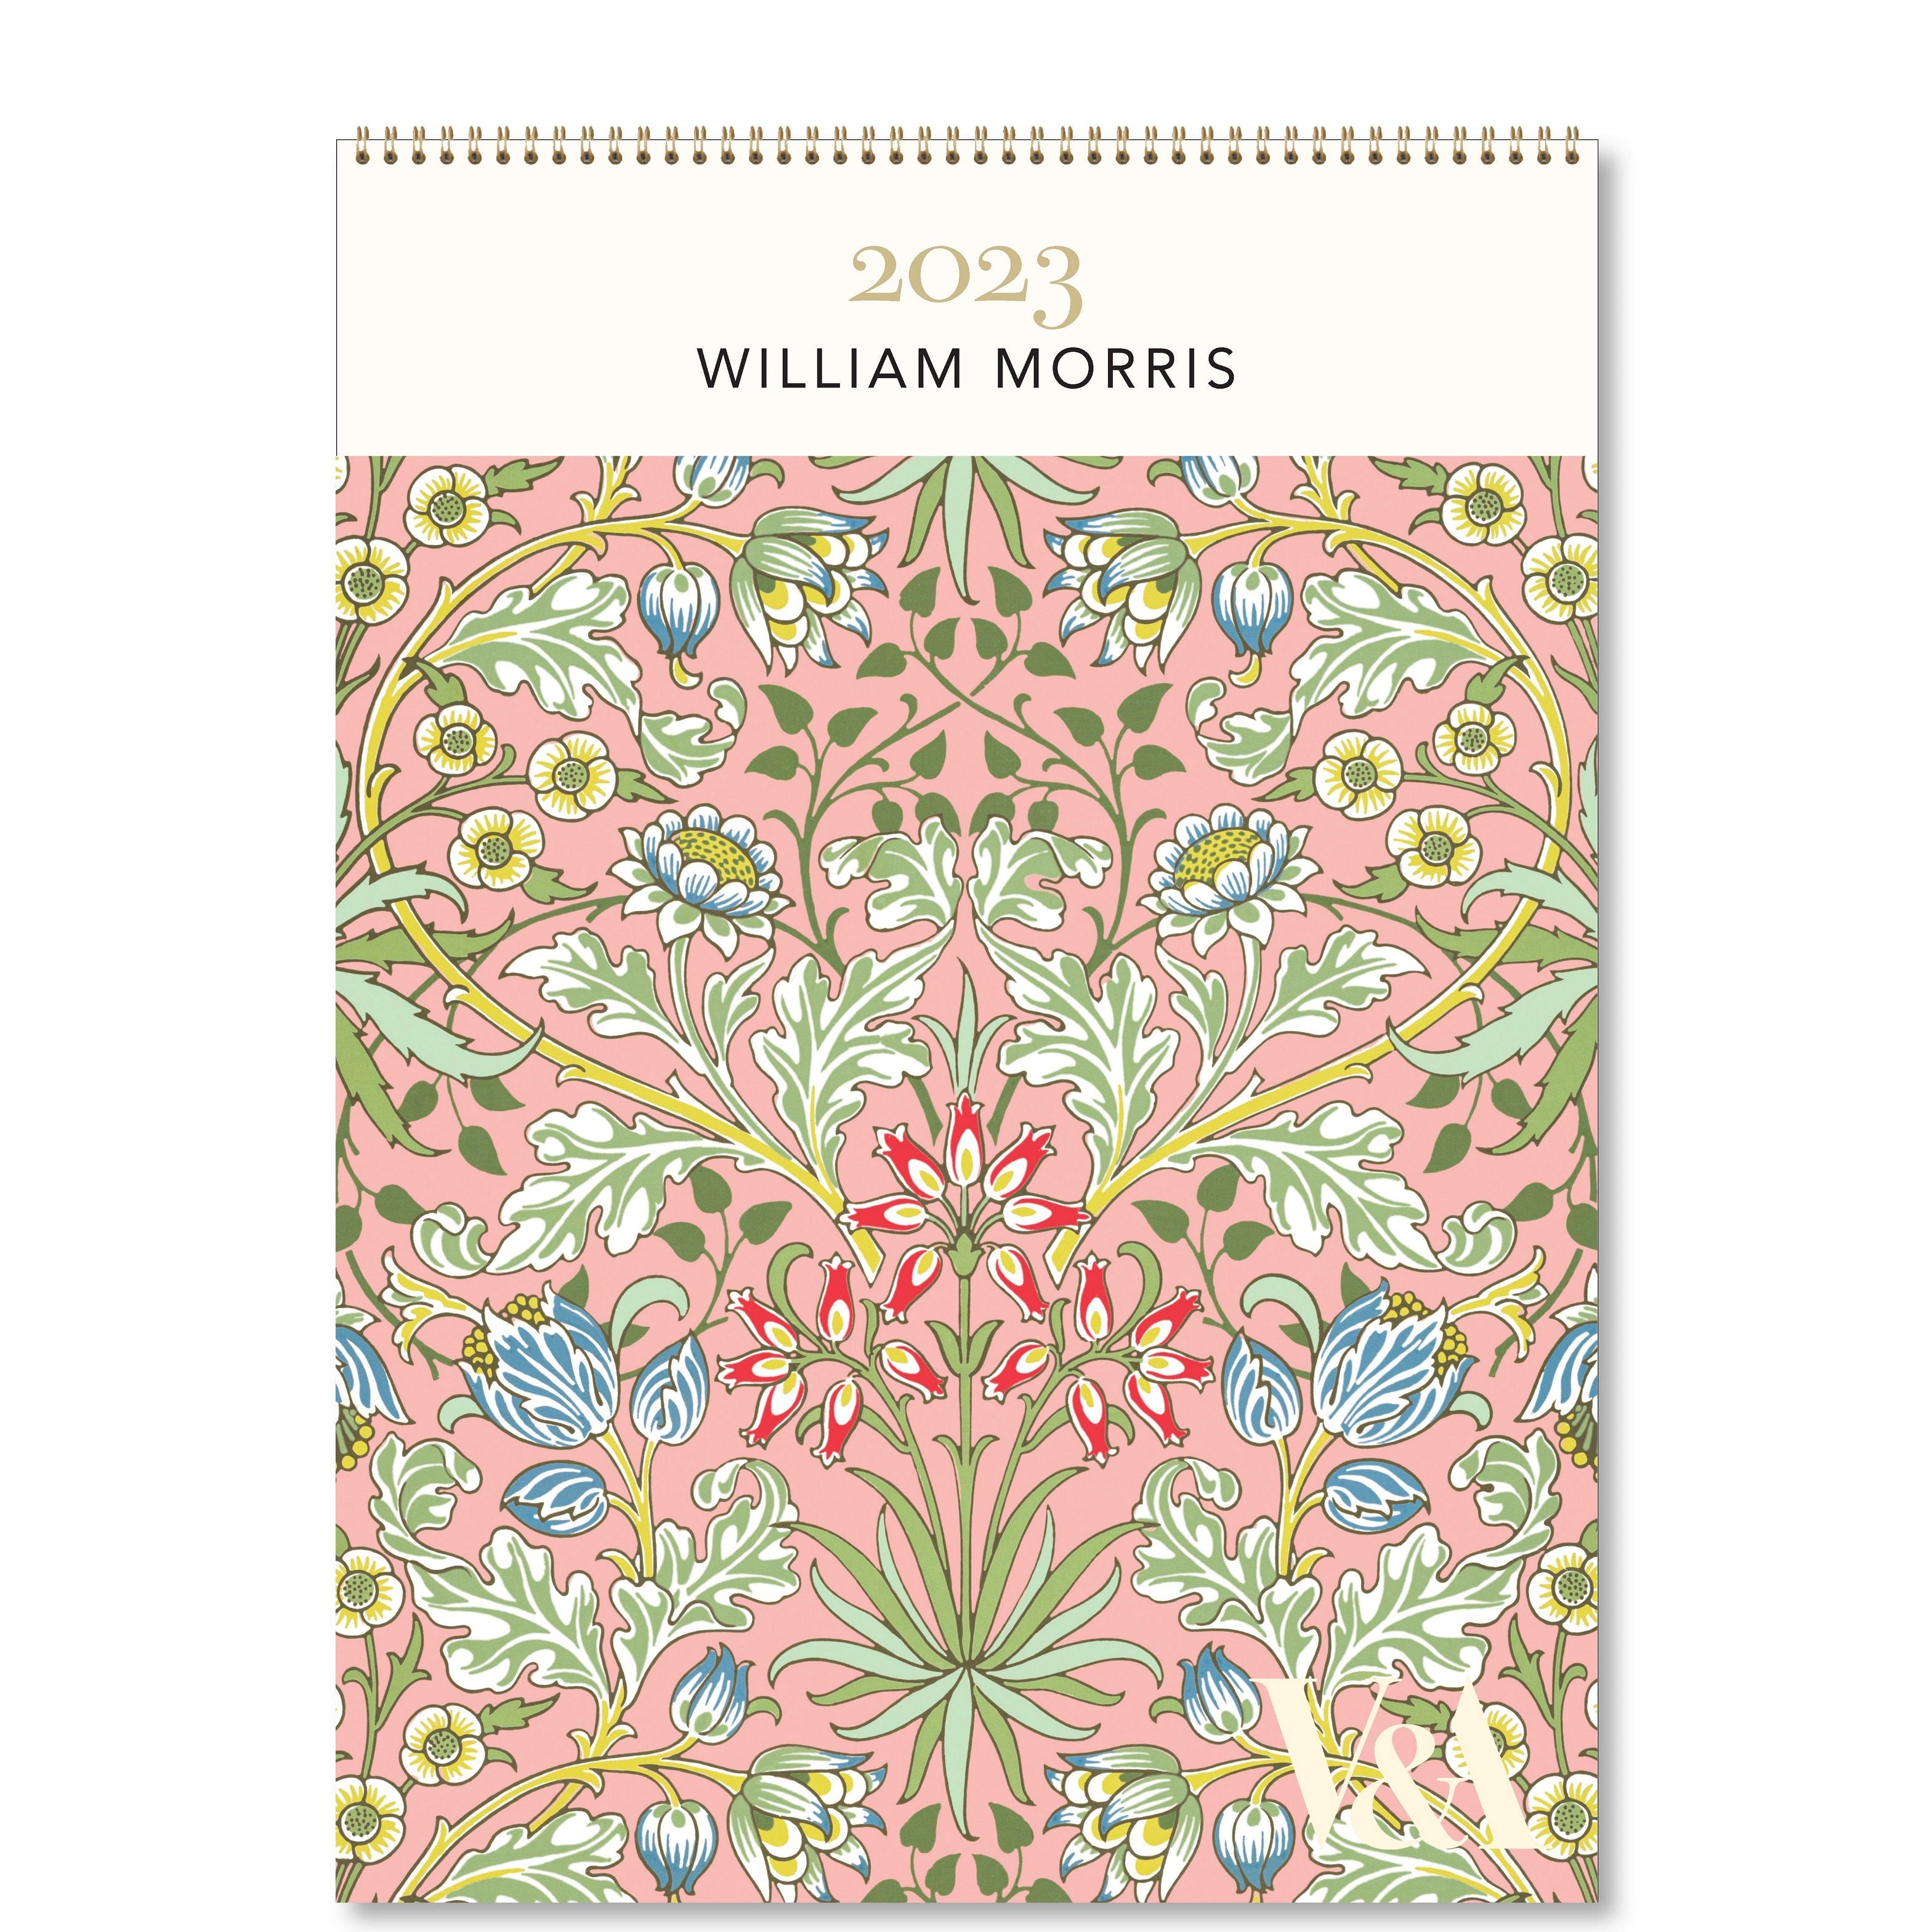 2023 William Morris - Deluxe Wall Calendar